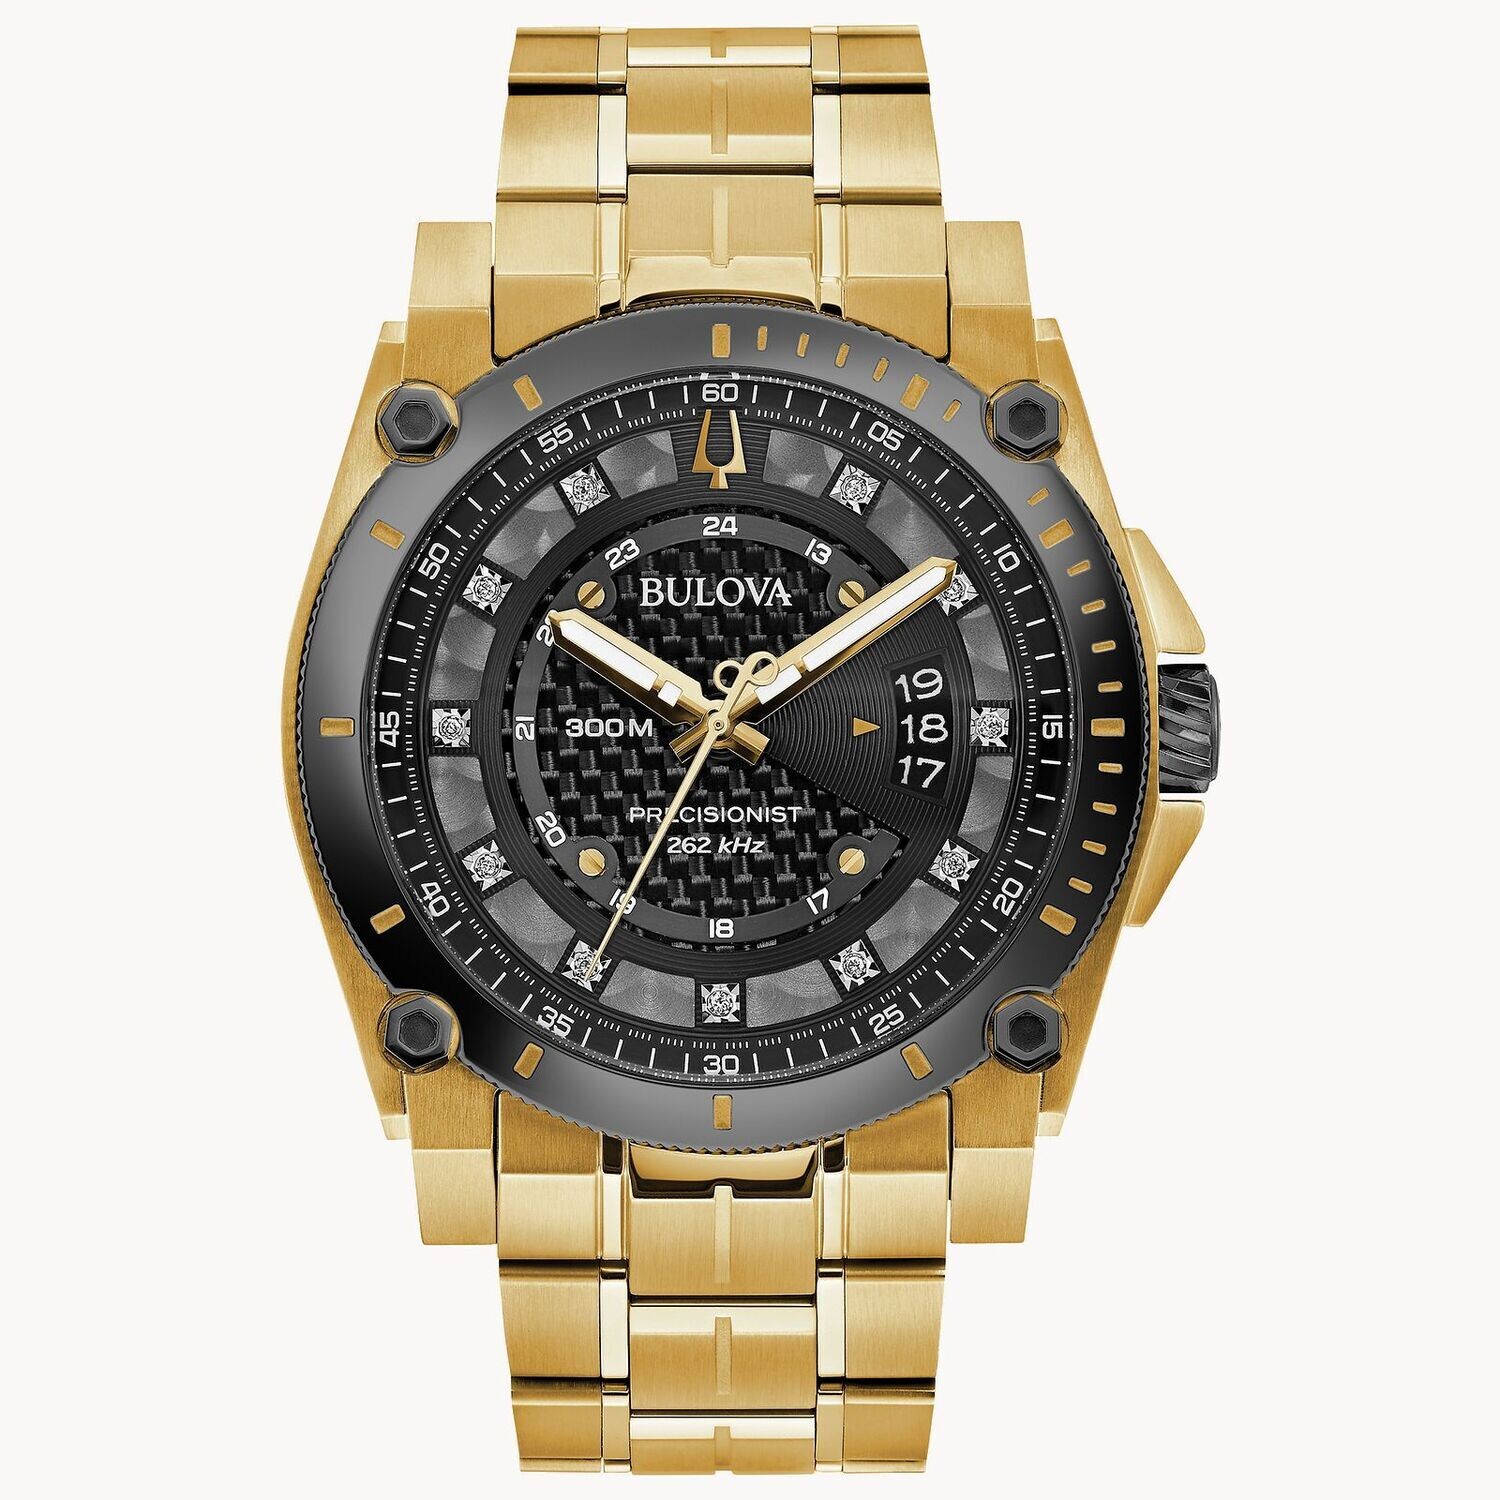 Bulova Precisionist Diamonds 98D156 46.5mm 300m WR men’s chronograph stainless steel bracelet